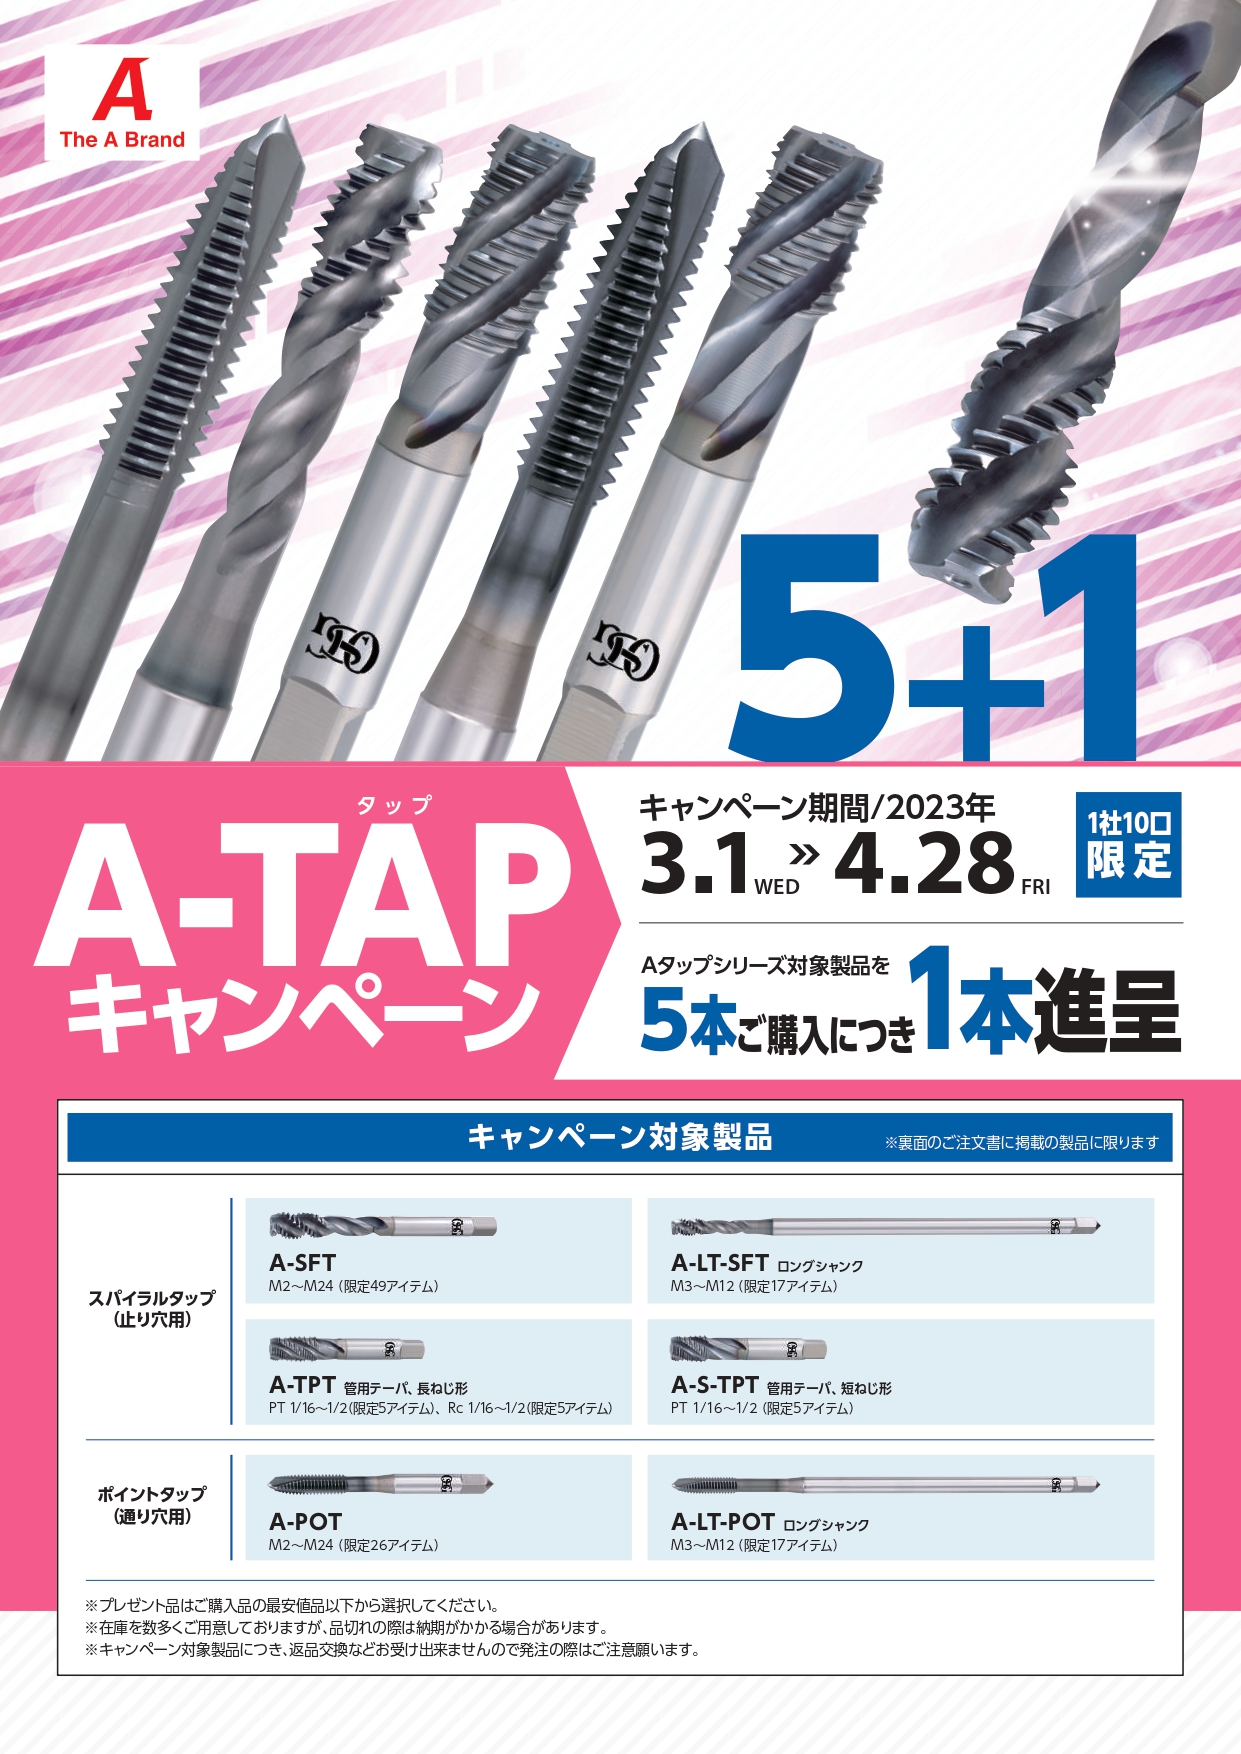 A-TAP キャンペーン